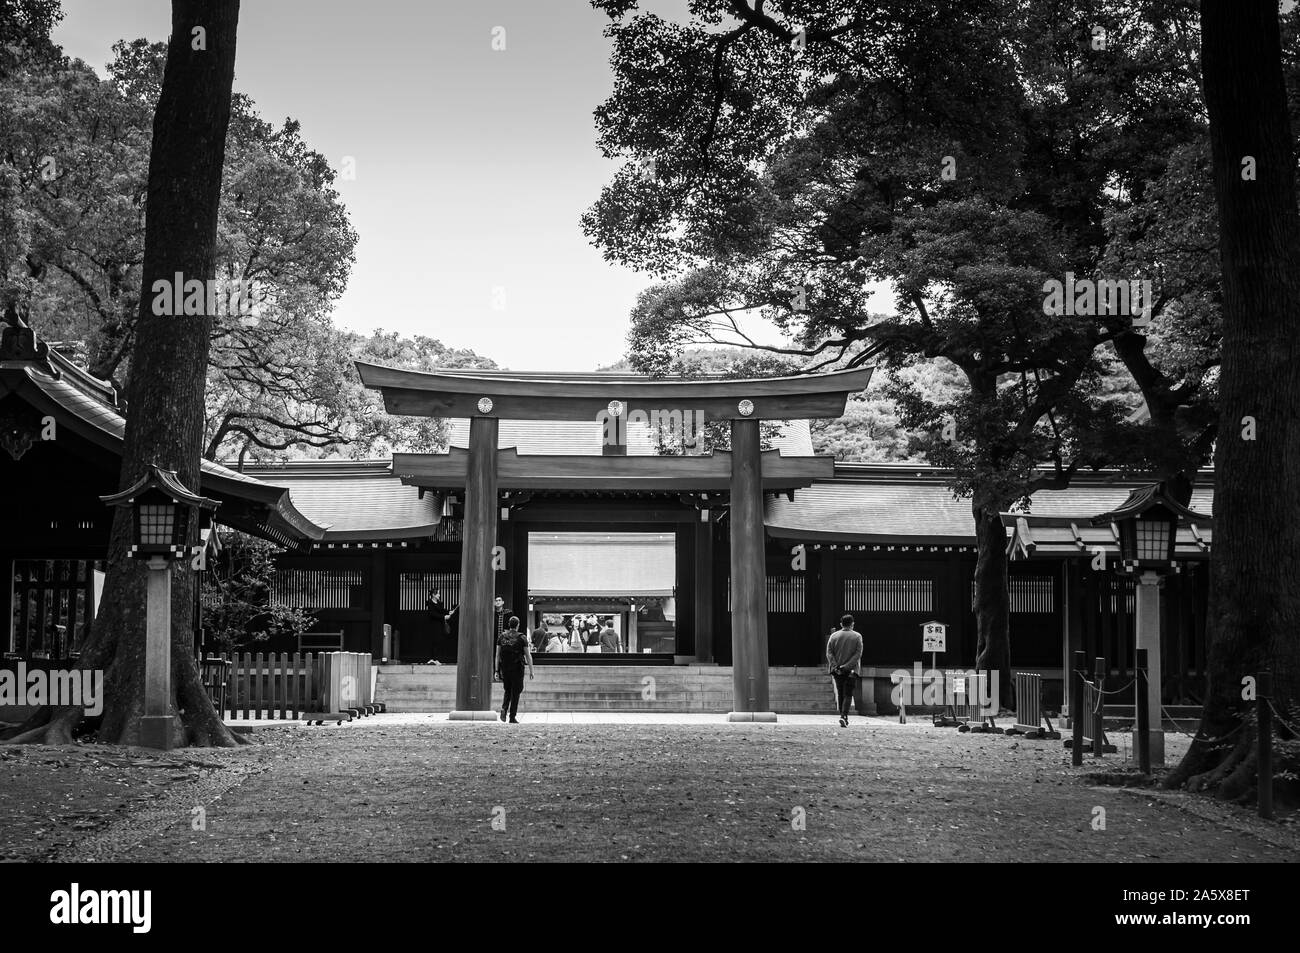 DEC 5, 2018 Tokyo, Japan - Meiji Jingu Shrine Large grand historic Wooden Torii gate under big trees with tourists - Most important shrine and city gr Stock Photo